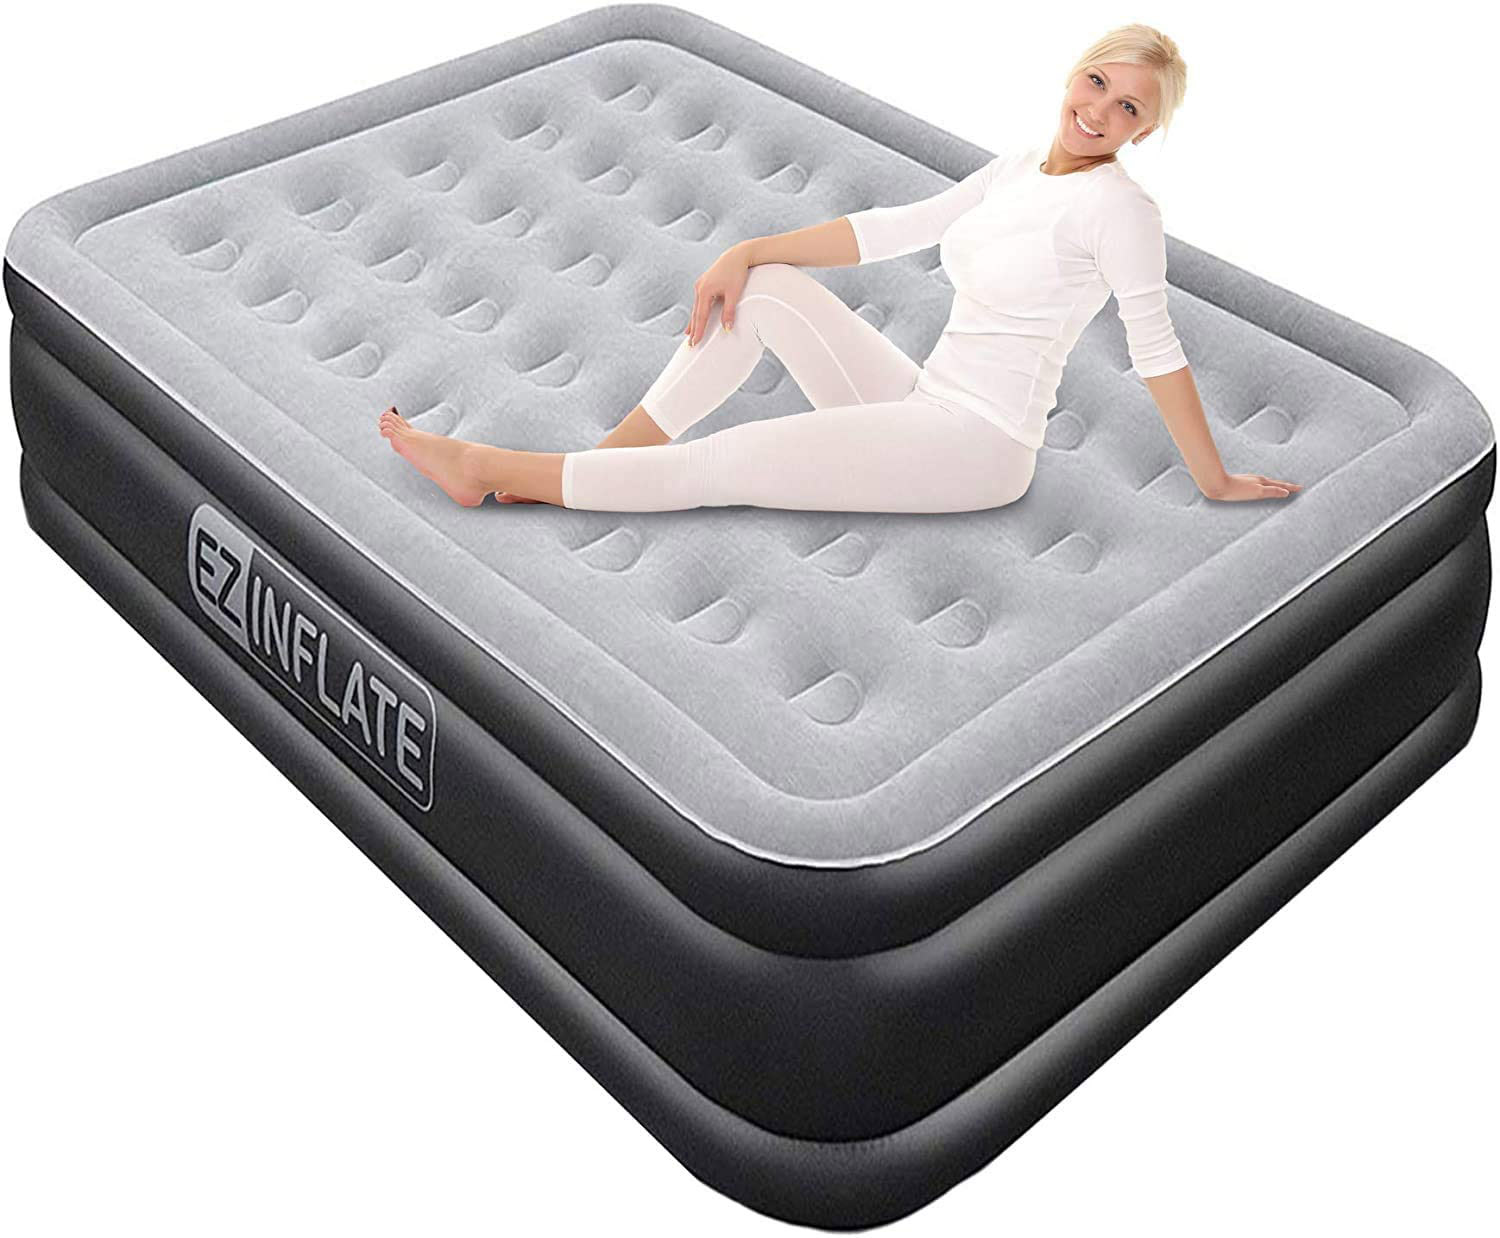 double air mattress tesco